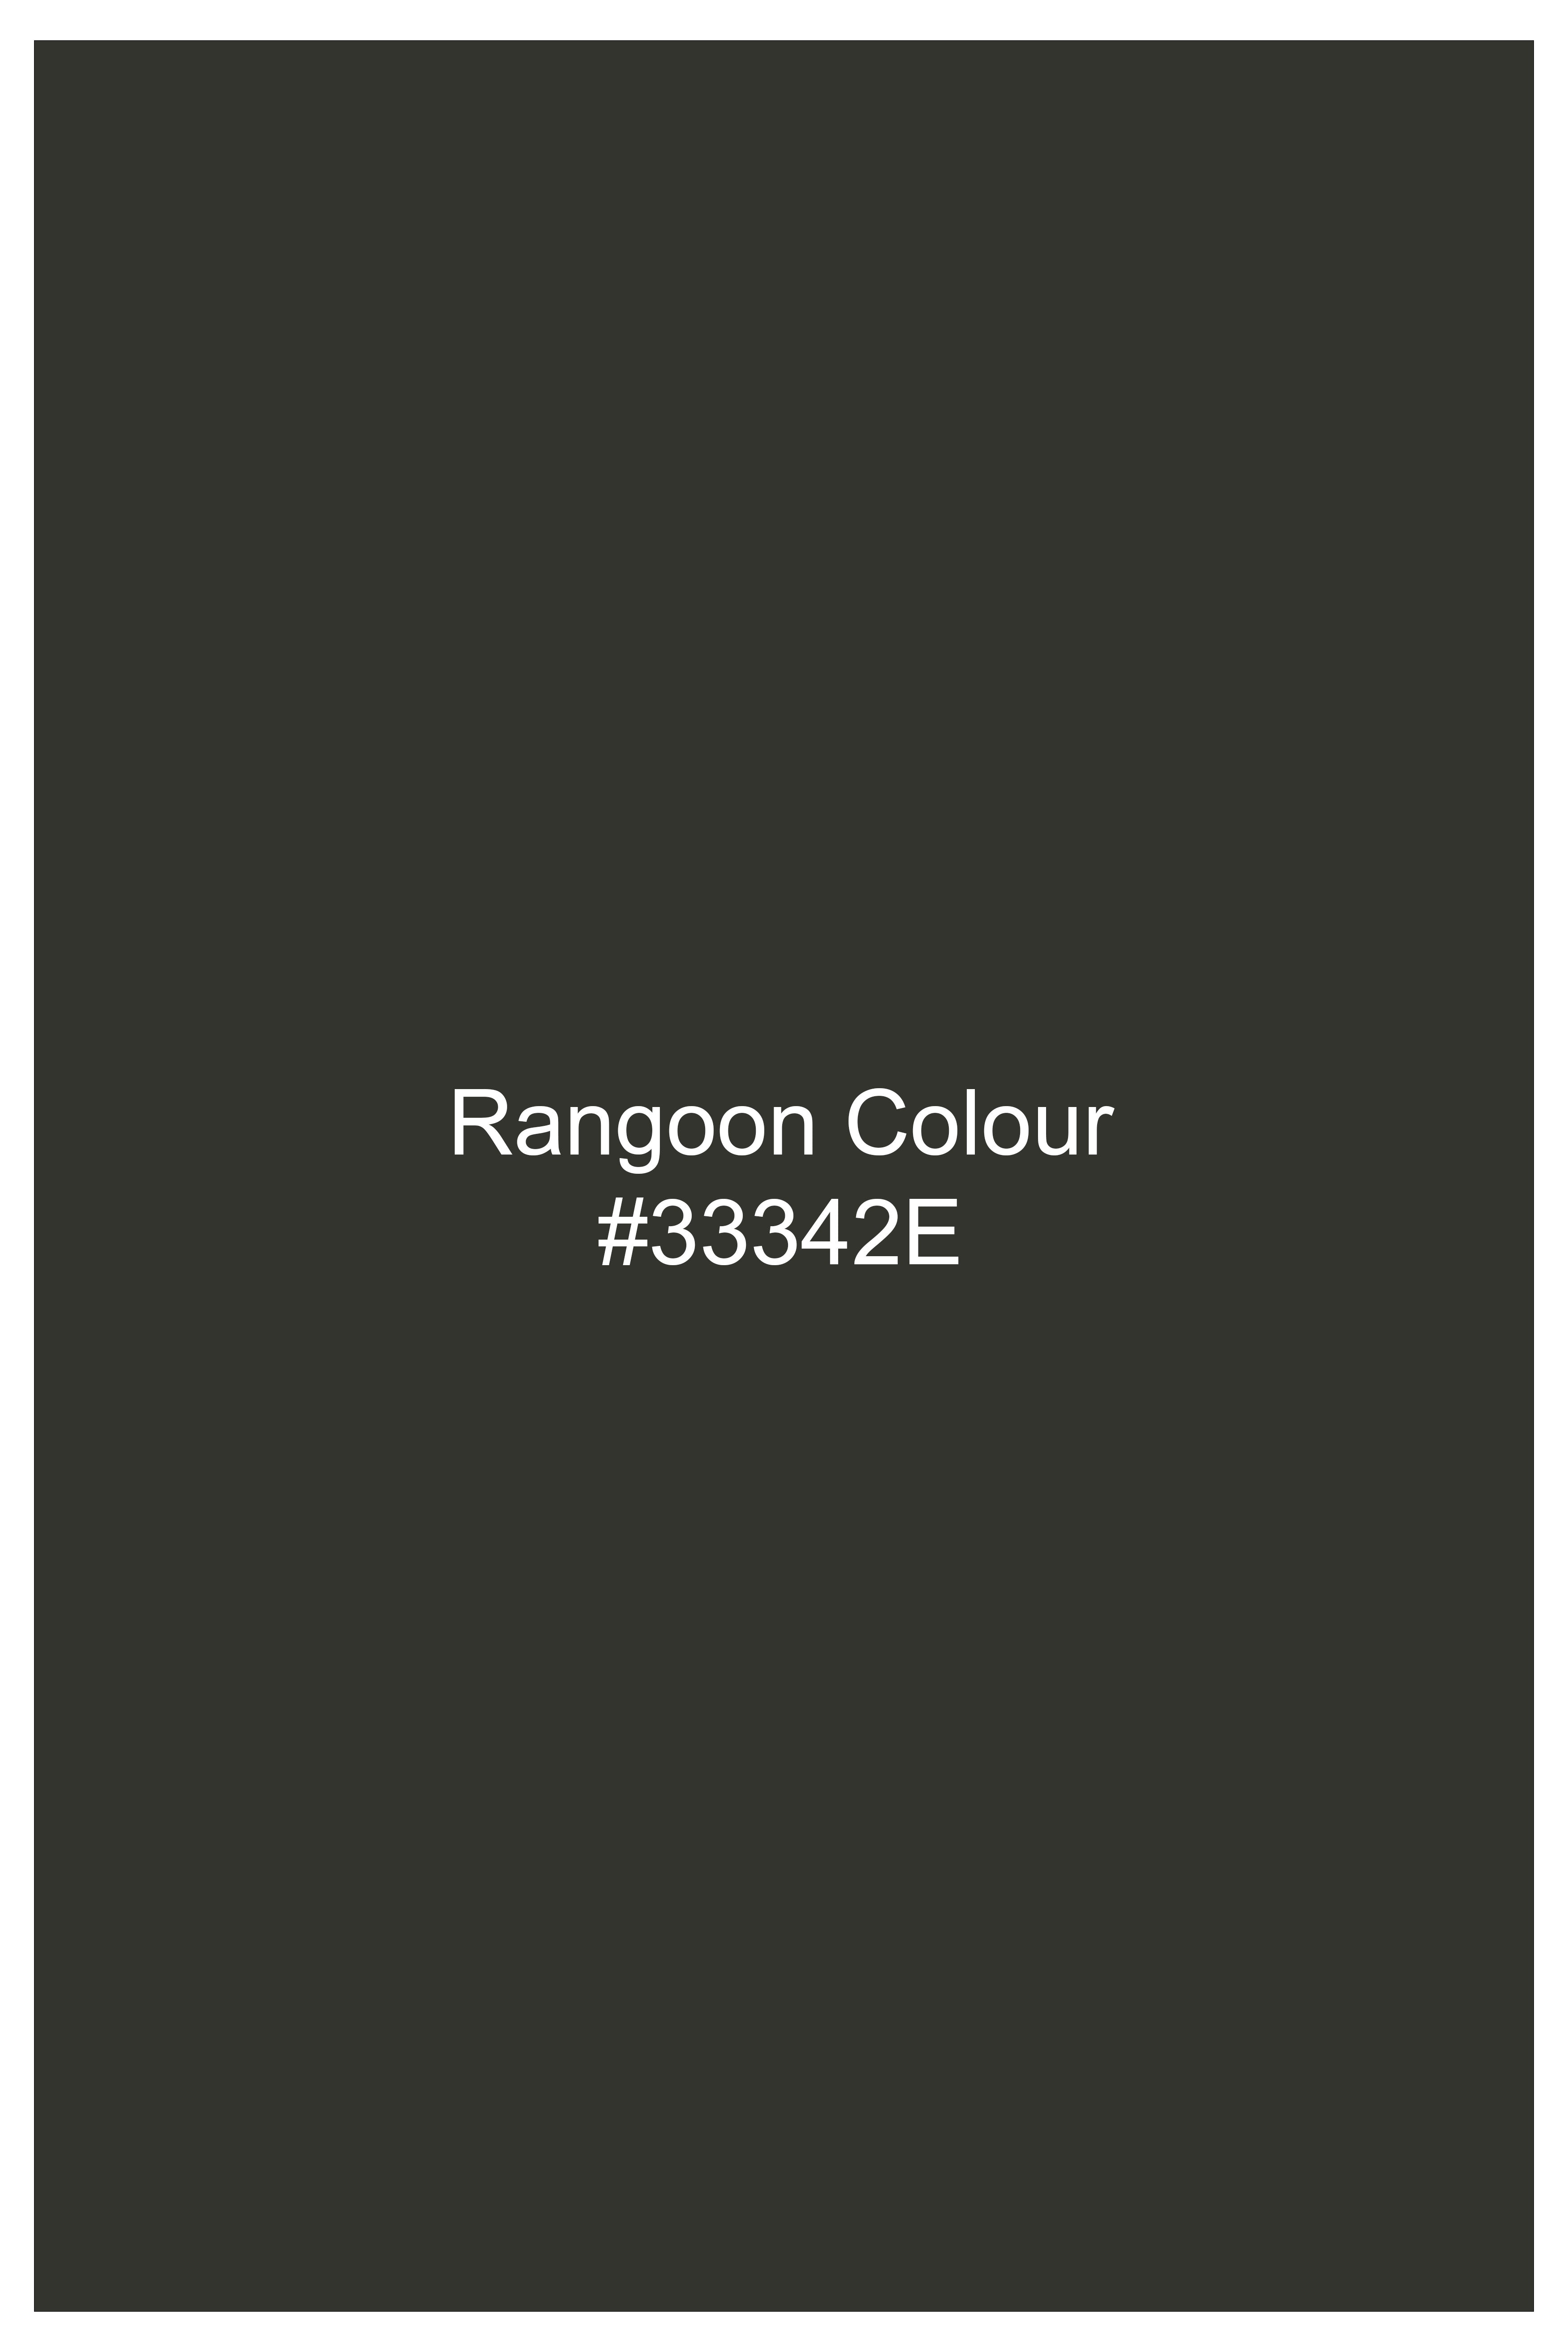 Rangoon Green Wool Blend Single Breasted Suit